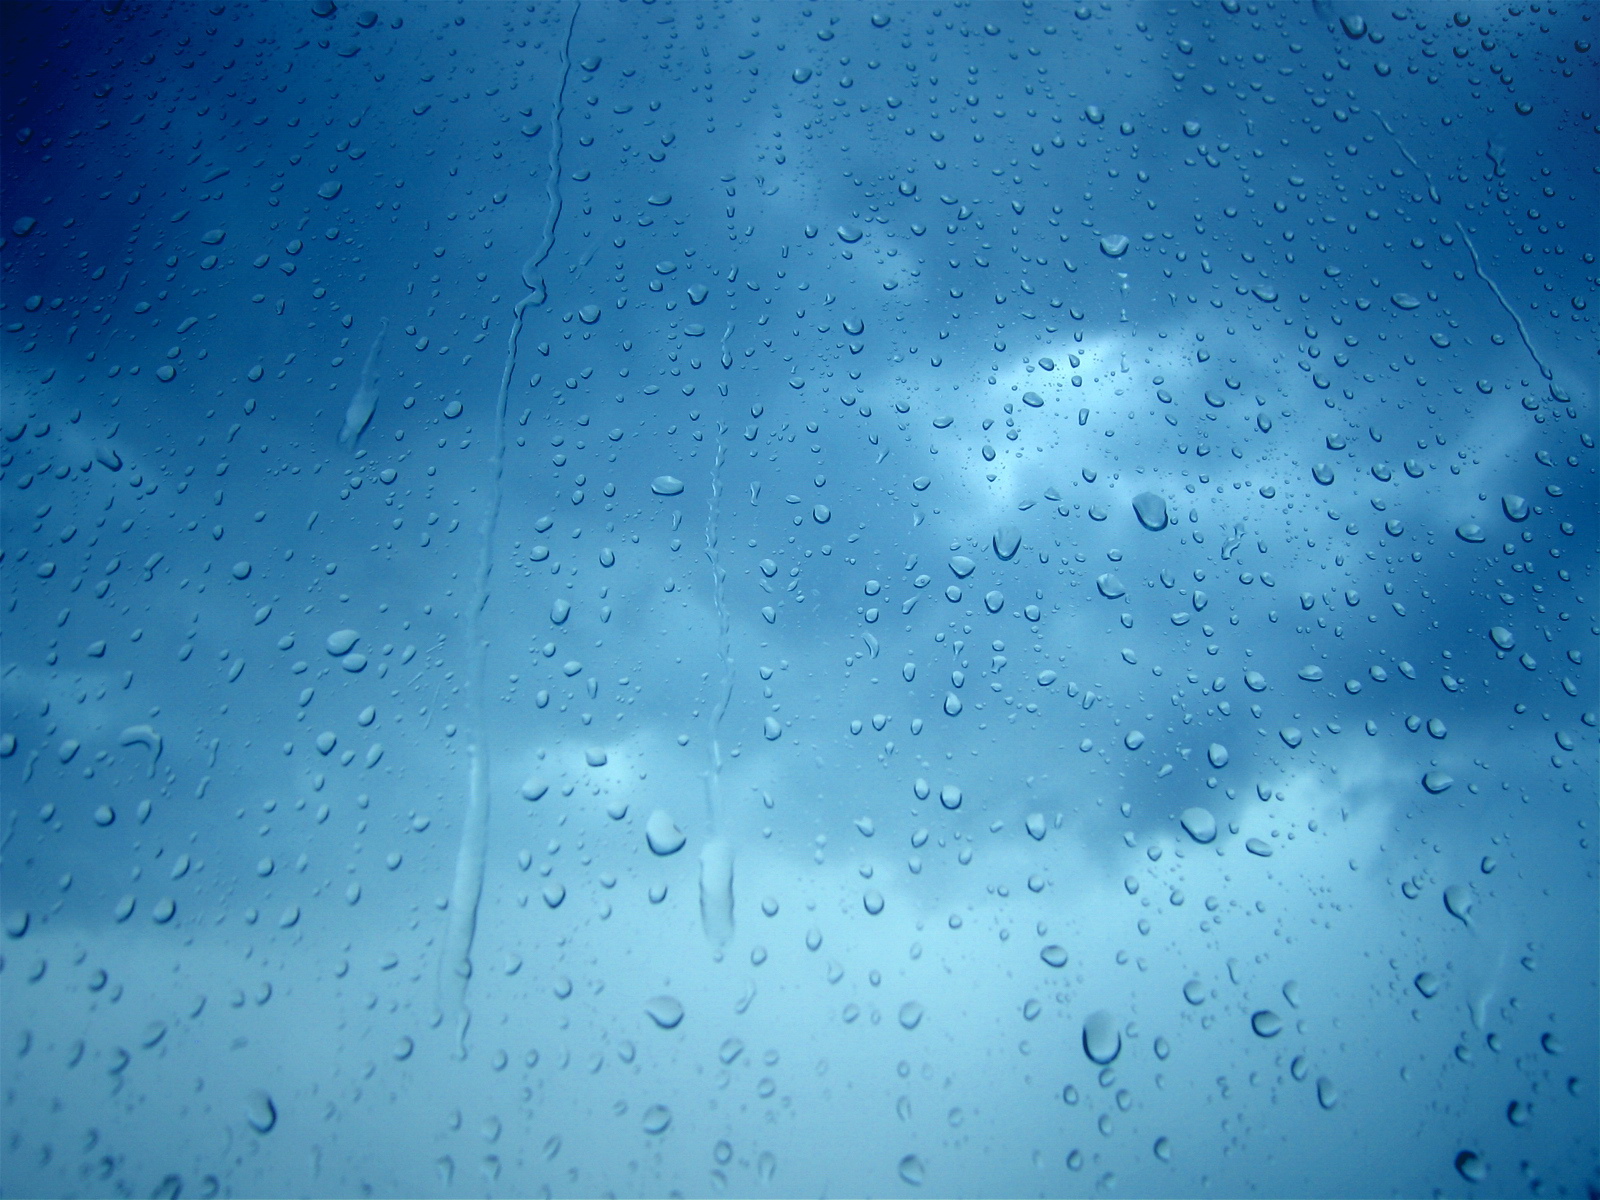 Rain Raindrops On Window Glass Beautiful Image Of A Rainy Day